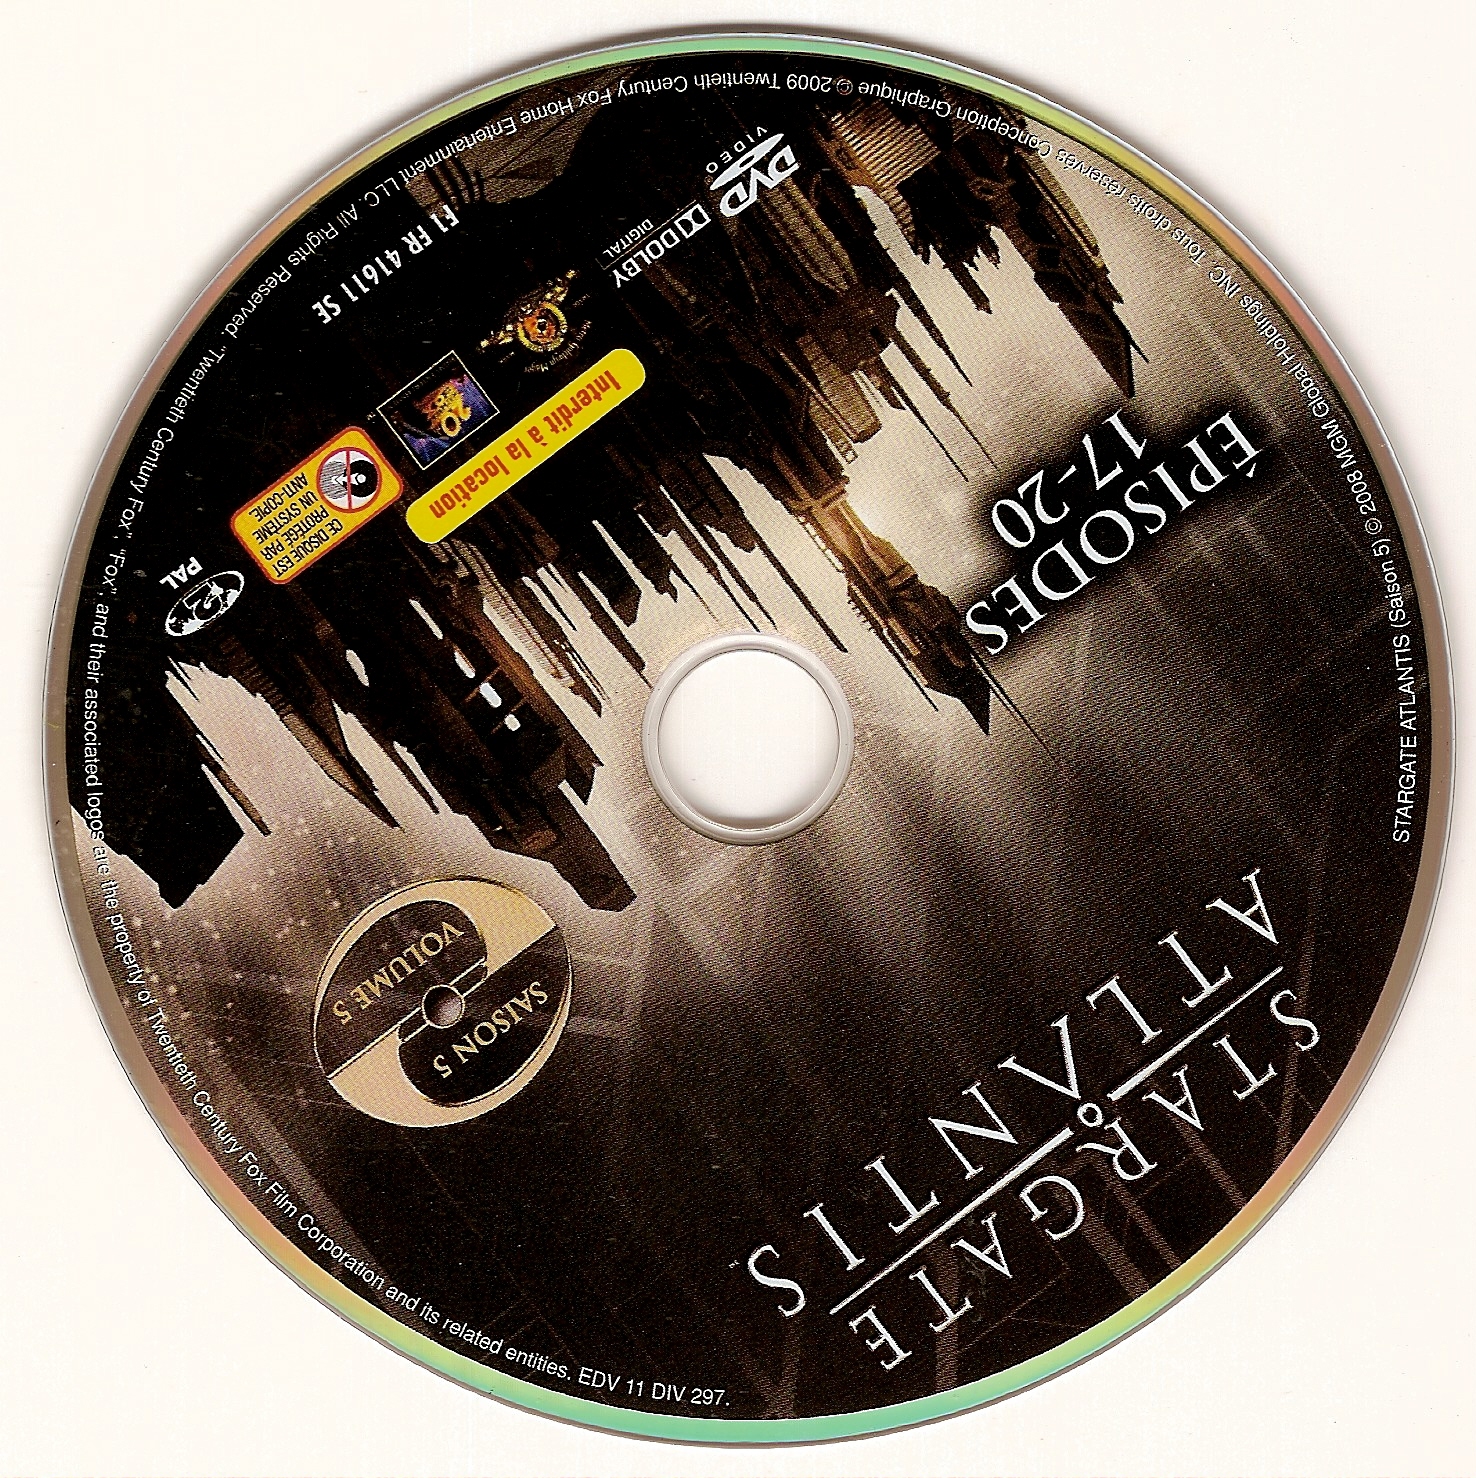 Stargate Atlantis saison 5 DISC 5